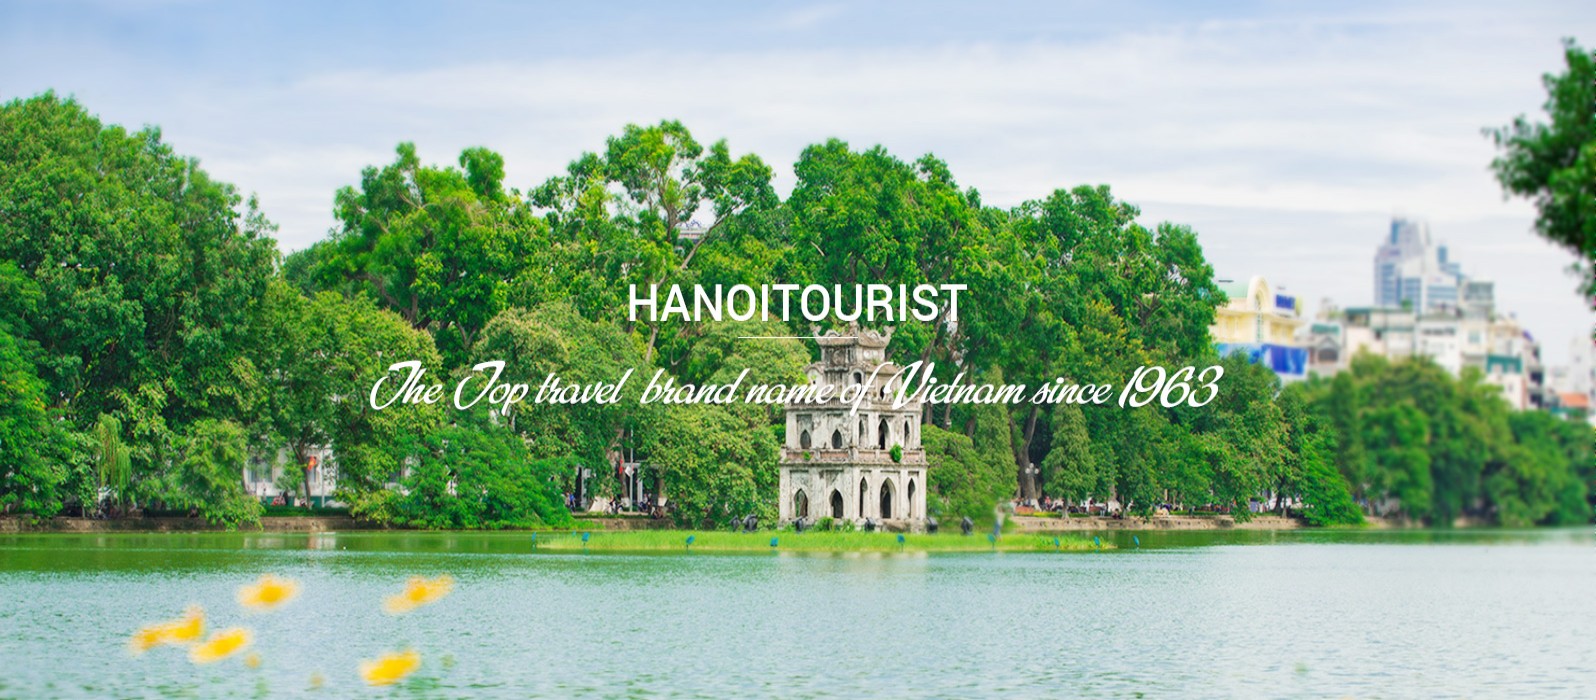 hanoi tourism corporation